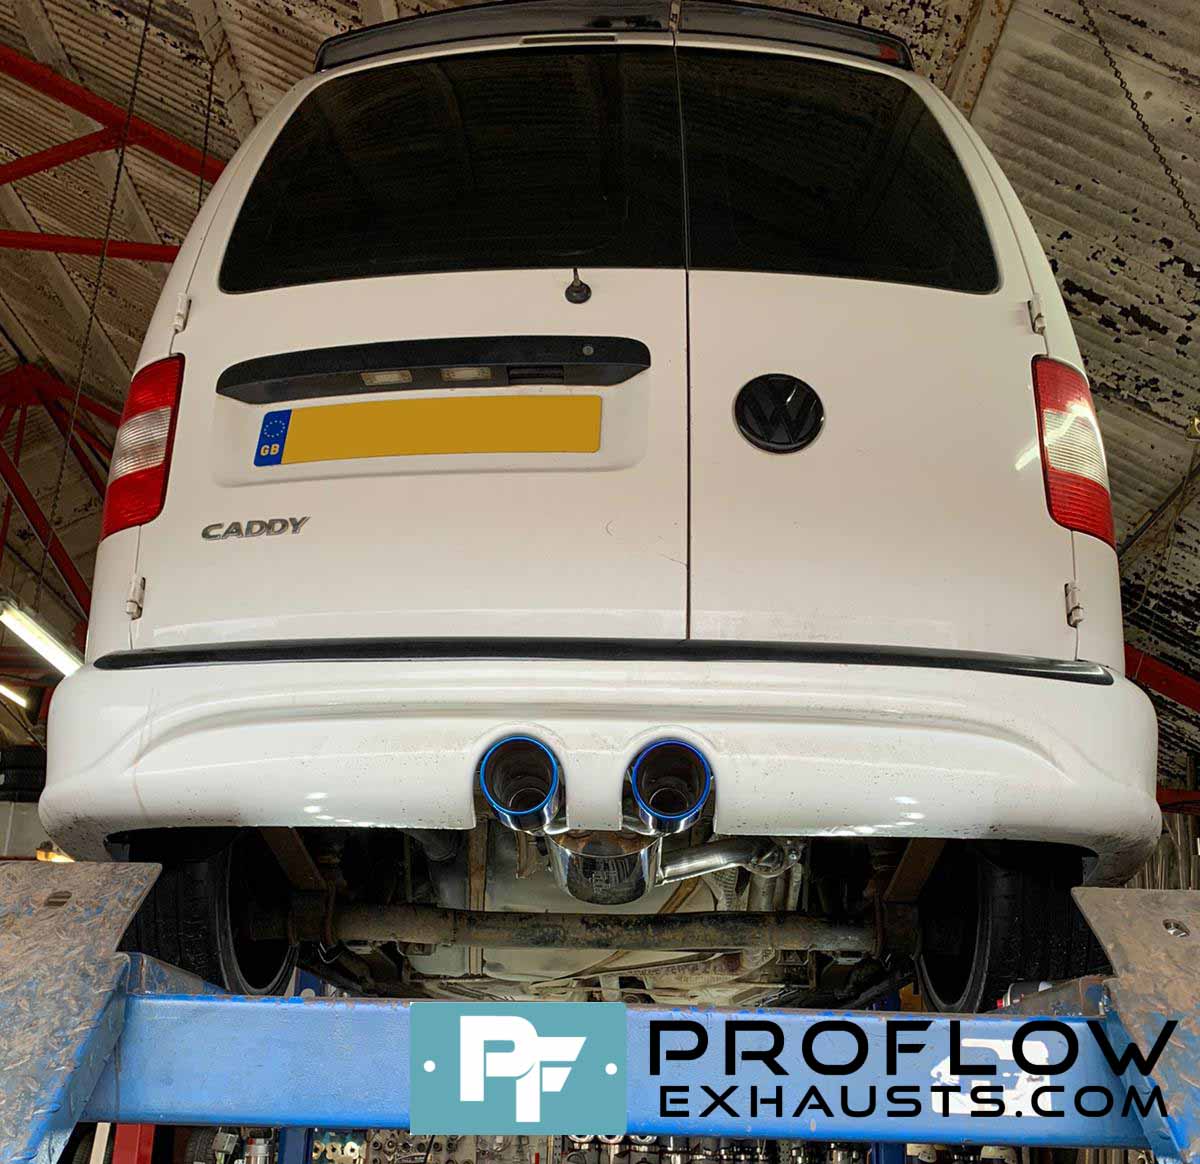 VW Caddy R32 Bumper Rear Exhaust Custom Built By Proflow Exhausts (1)